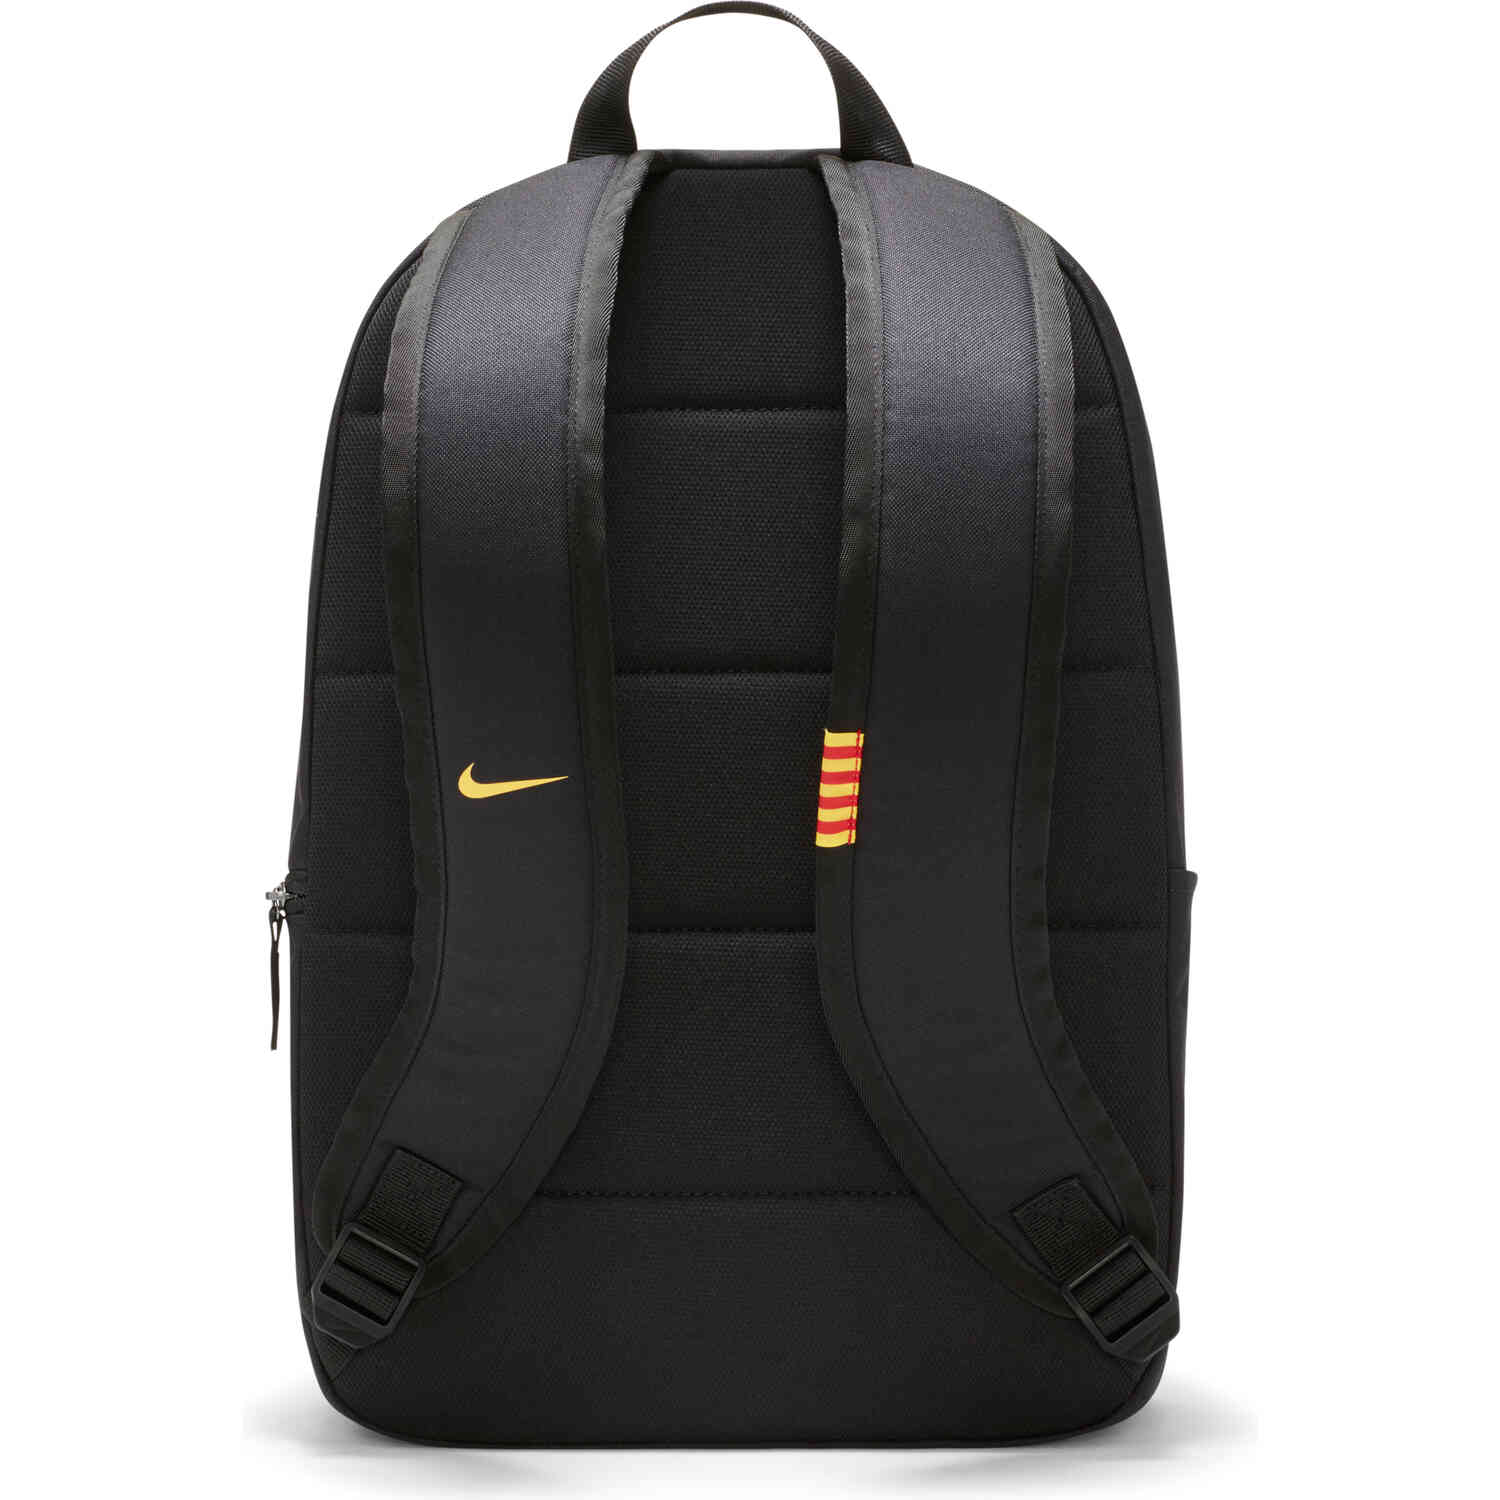 Nike Barcelona Backpack - Black & Varsity Maize - SoccerPro